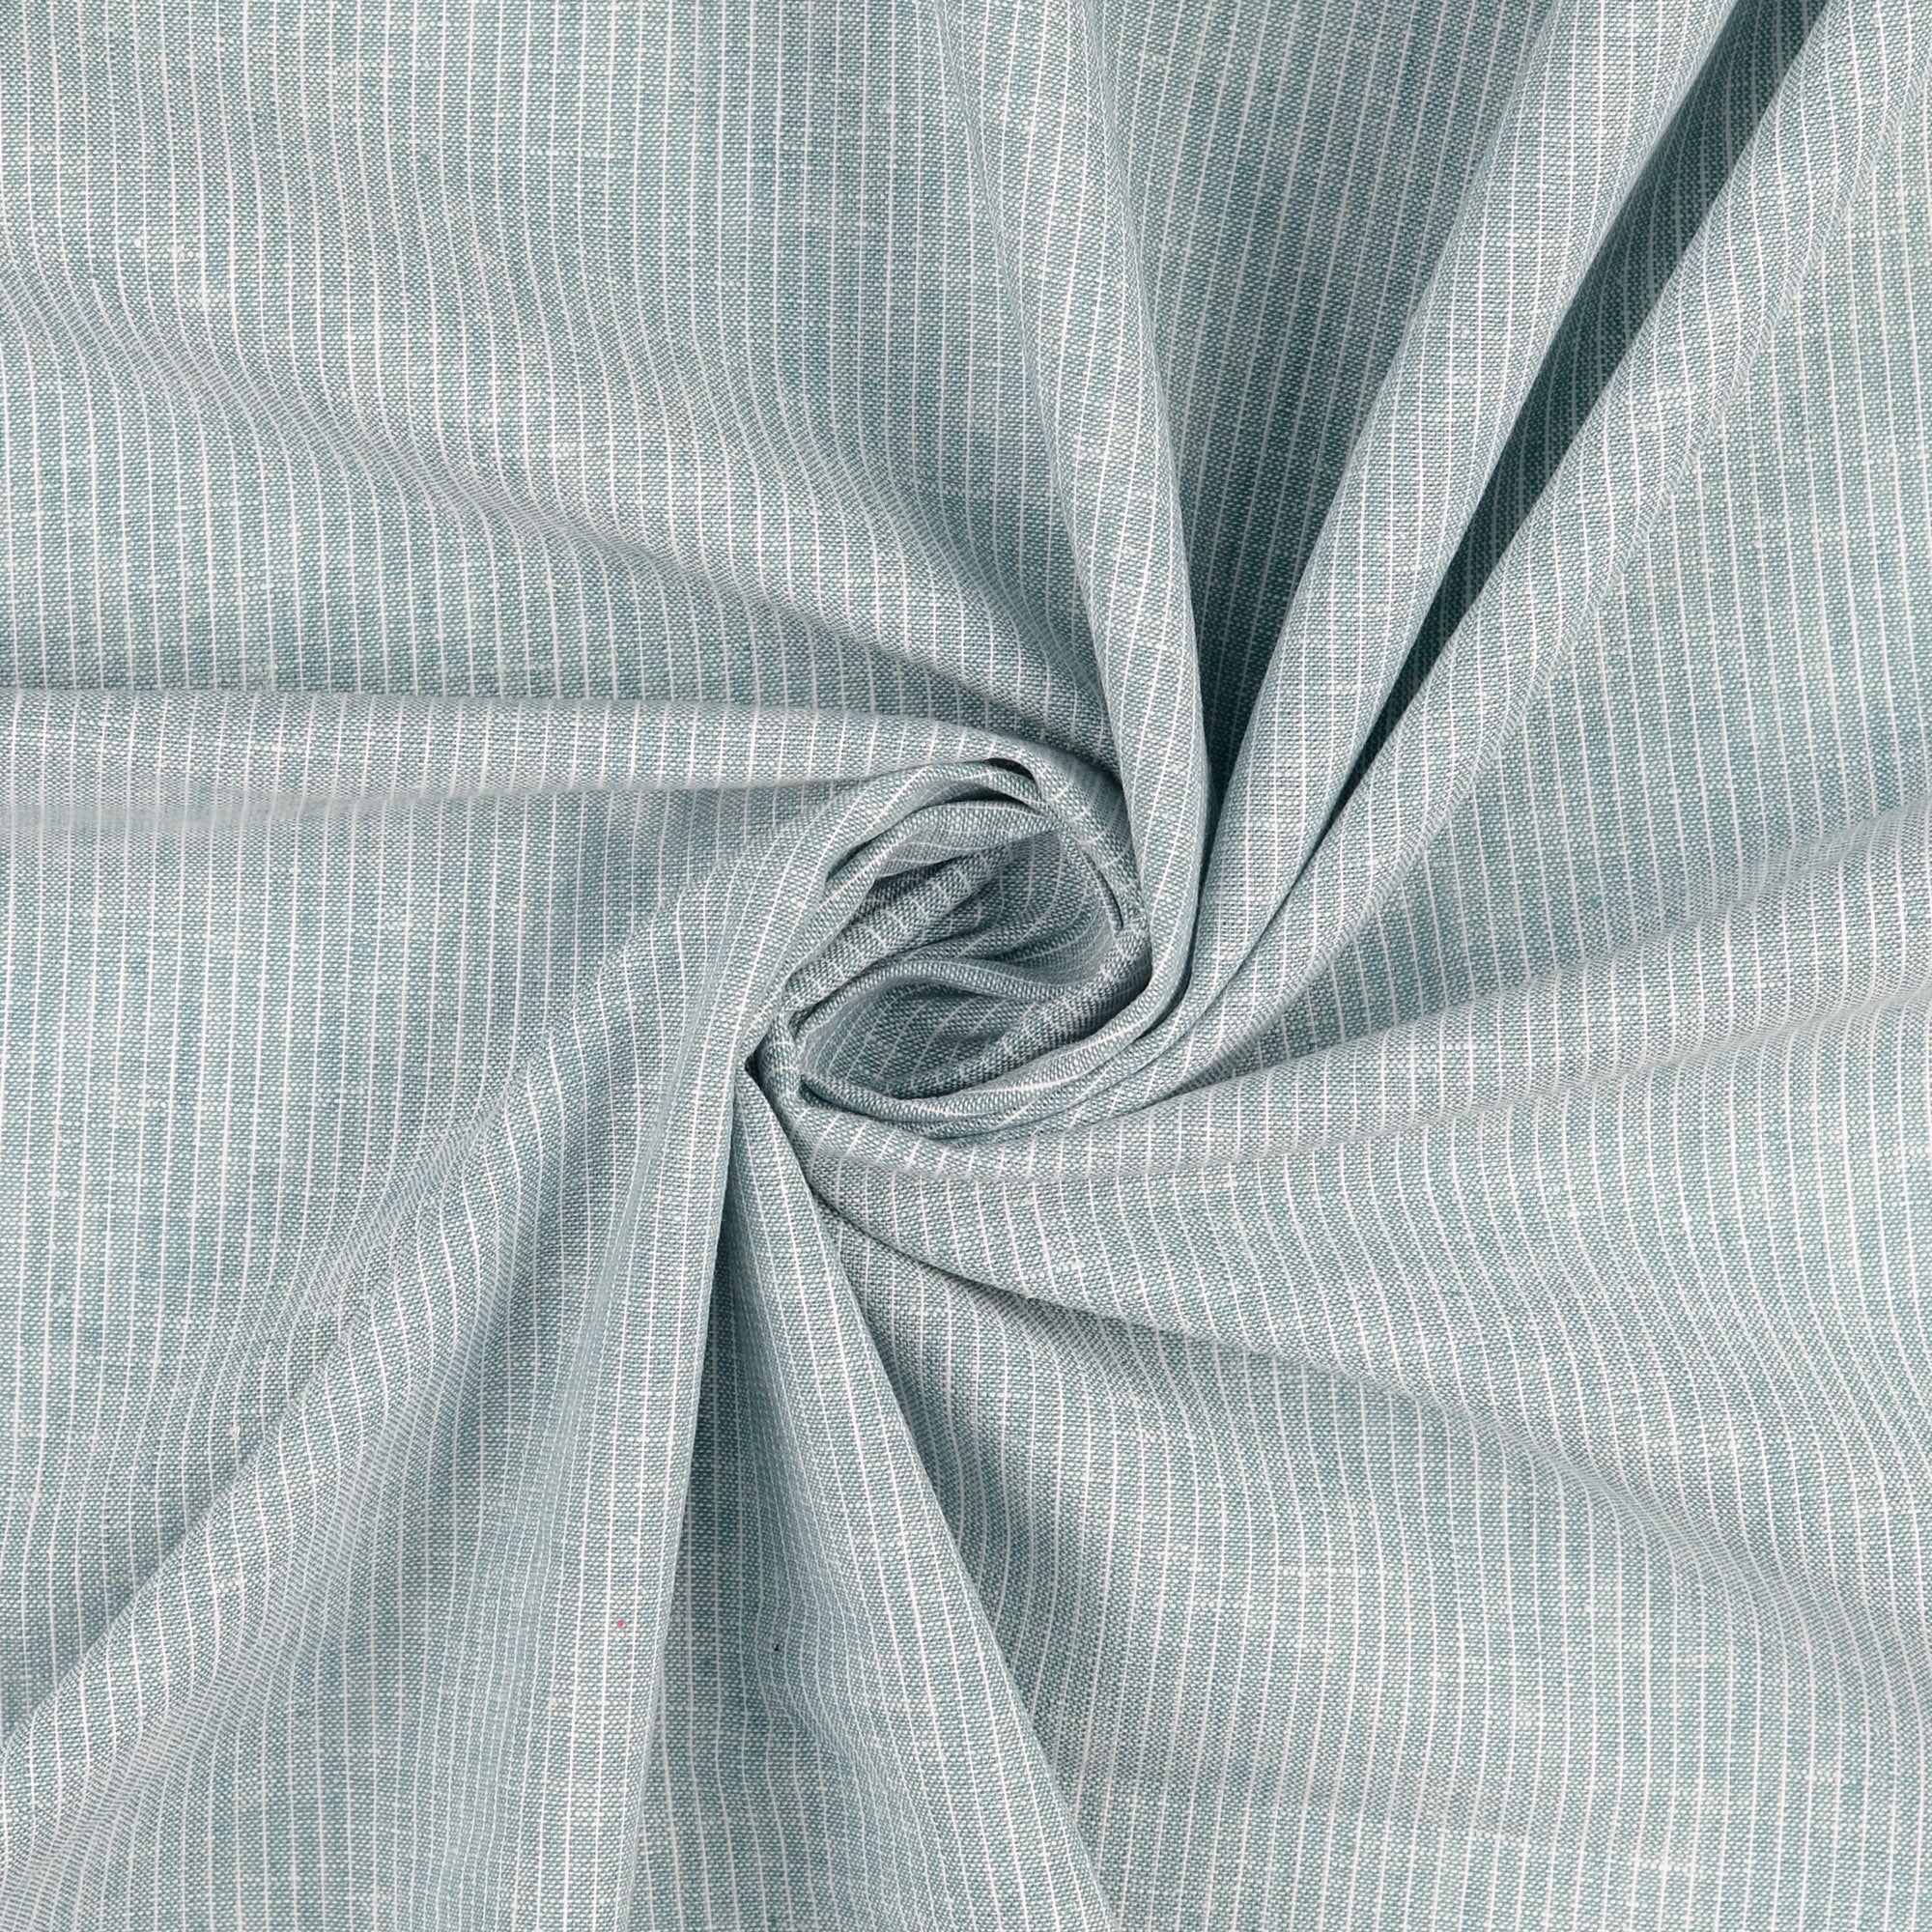 REMNANT 1.2 Metres - Fine Stripe Aqua Blue Linen Cotton Fabric